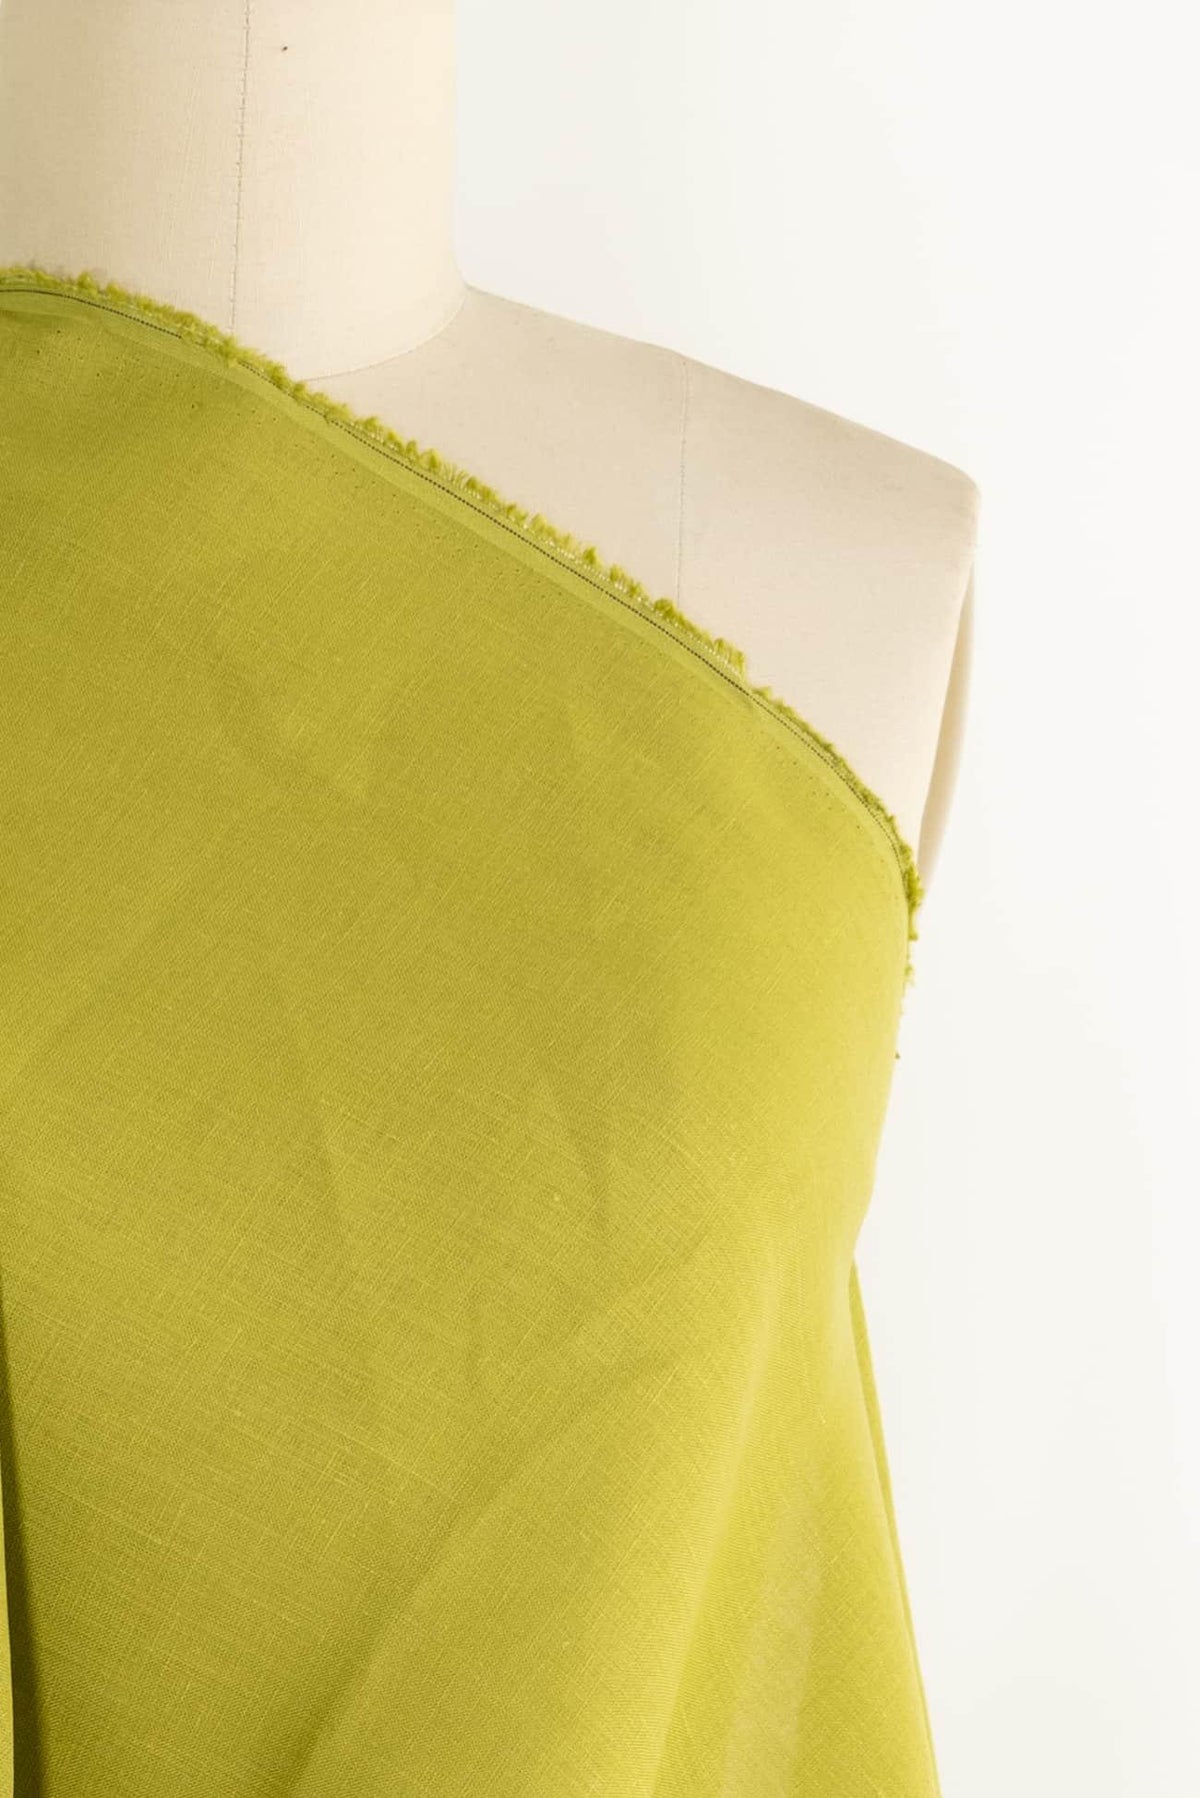 Granny Smith Green Linen Woven - Marcy Tilton Fabrics